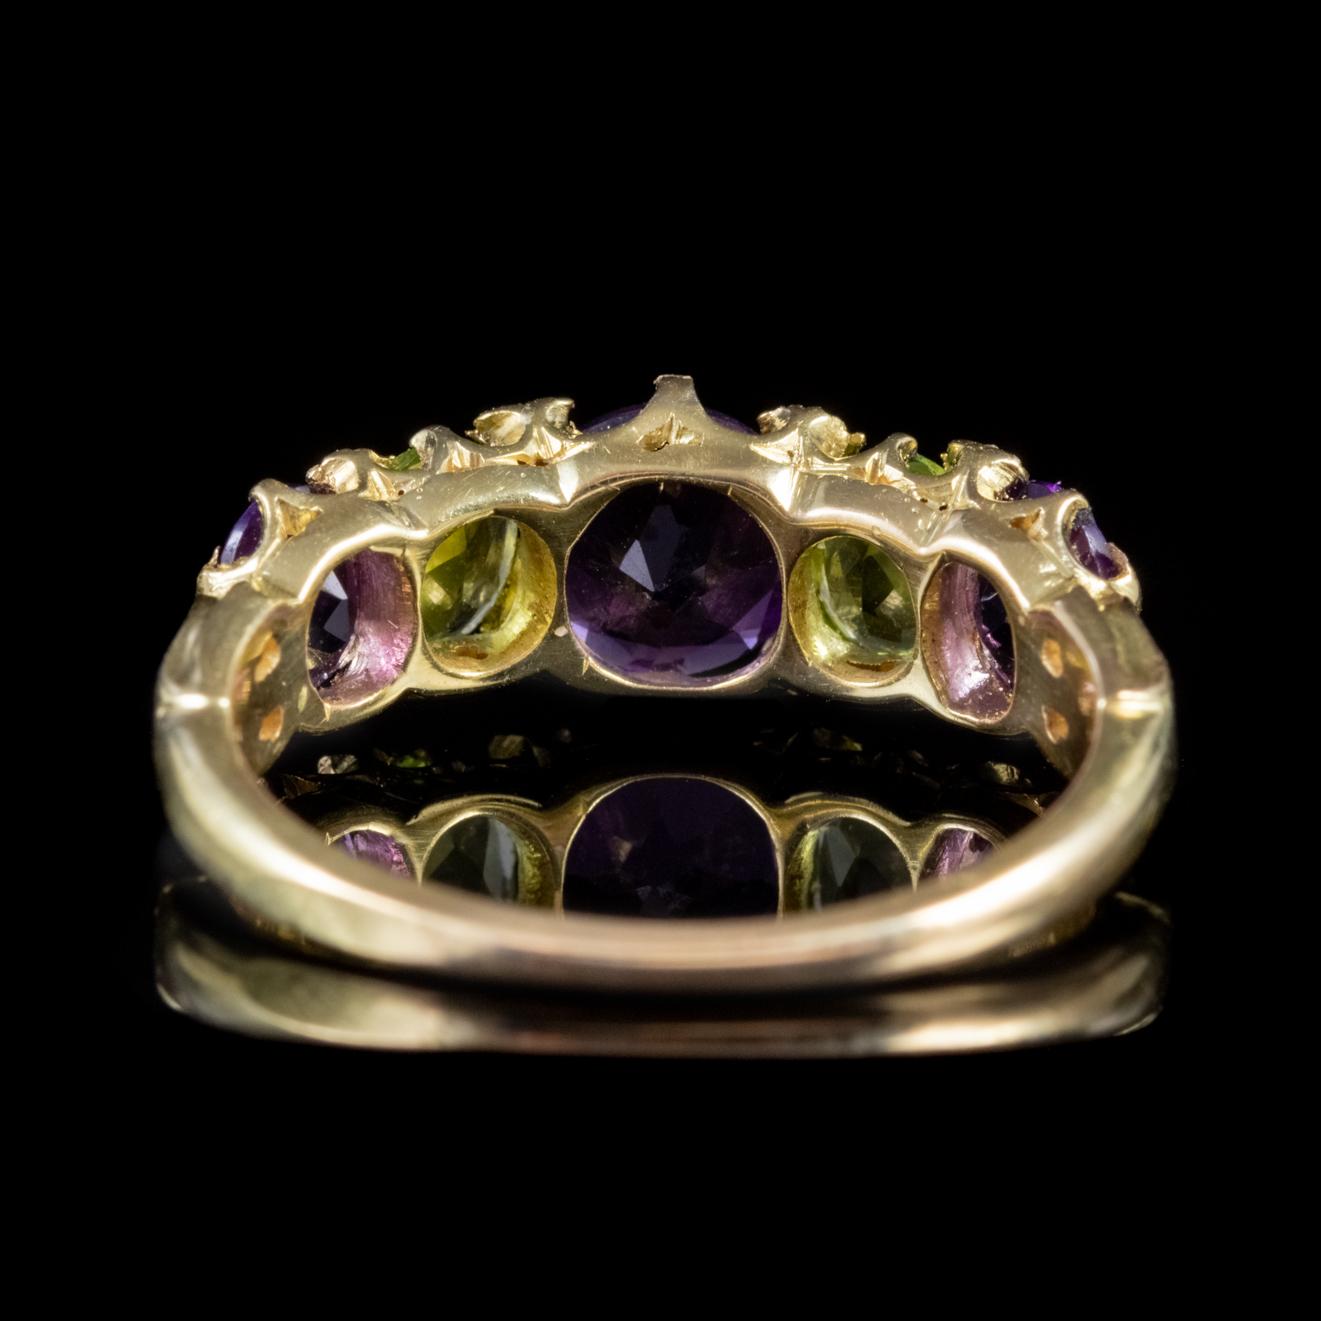 Women's Antique Suffragette Edwardian Amethyst Peridot Ring 18 Carat Gold, circa 1910